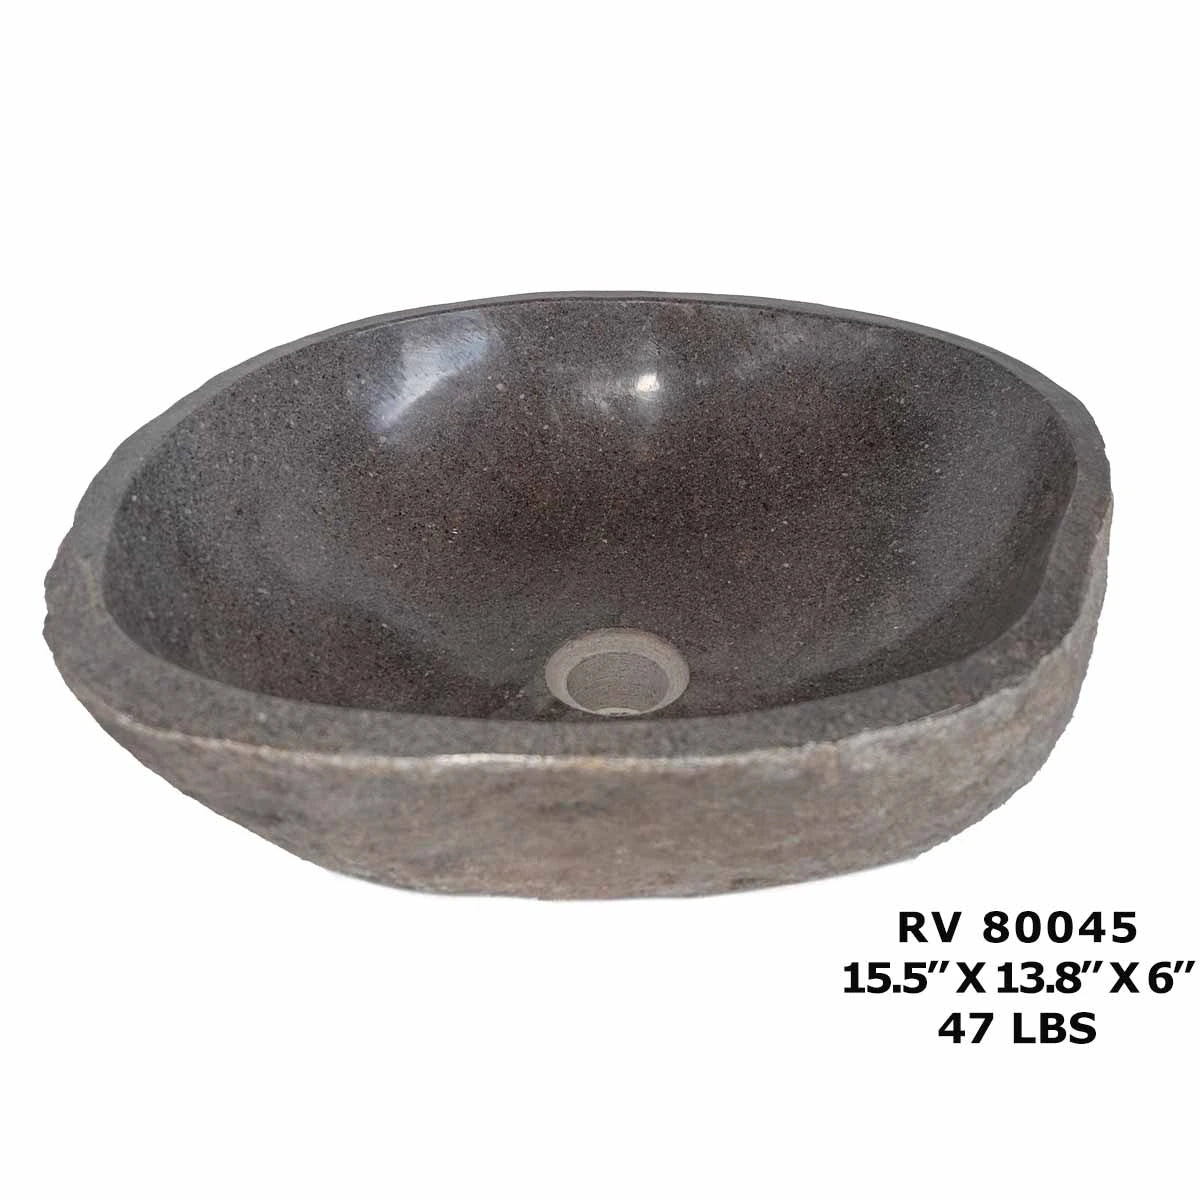 RV80045-Natural River Stone Unique Vessel Sink - Wash Basin Sink